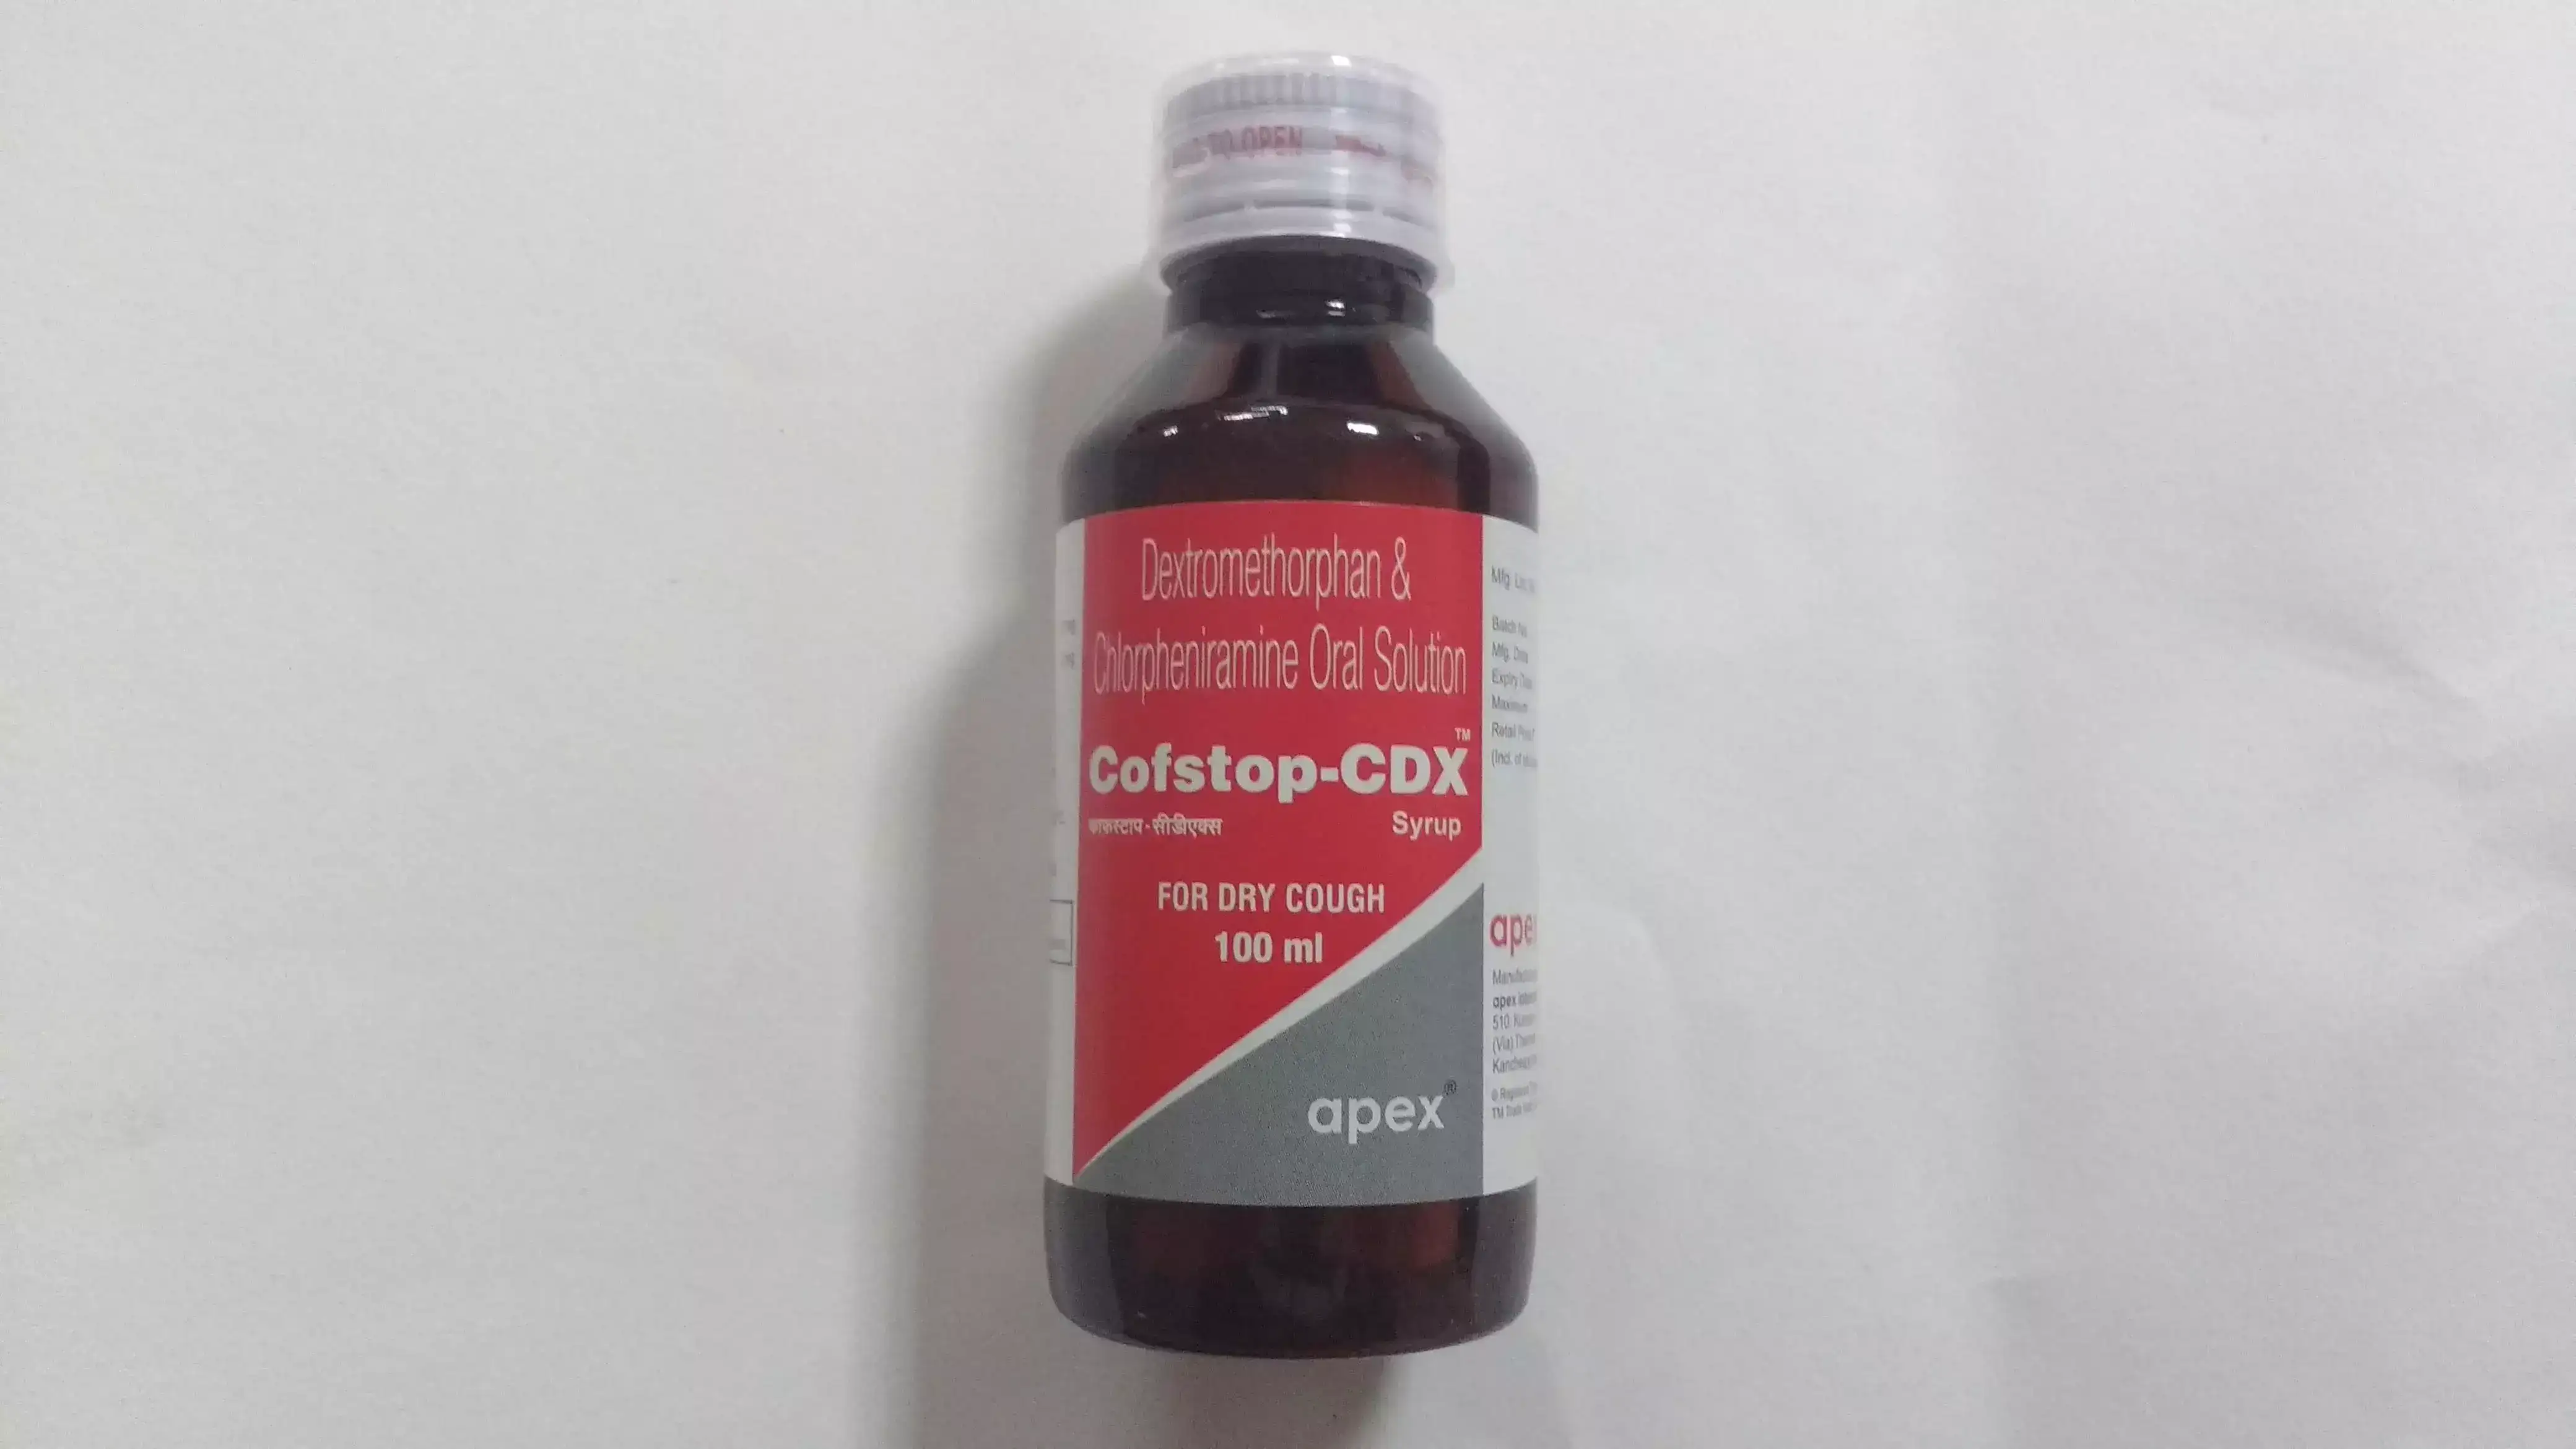 Cofstop-CDX Syrup